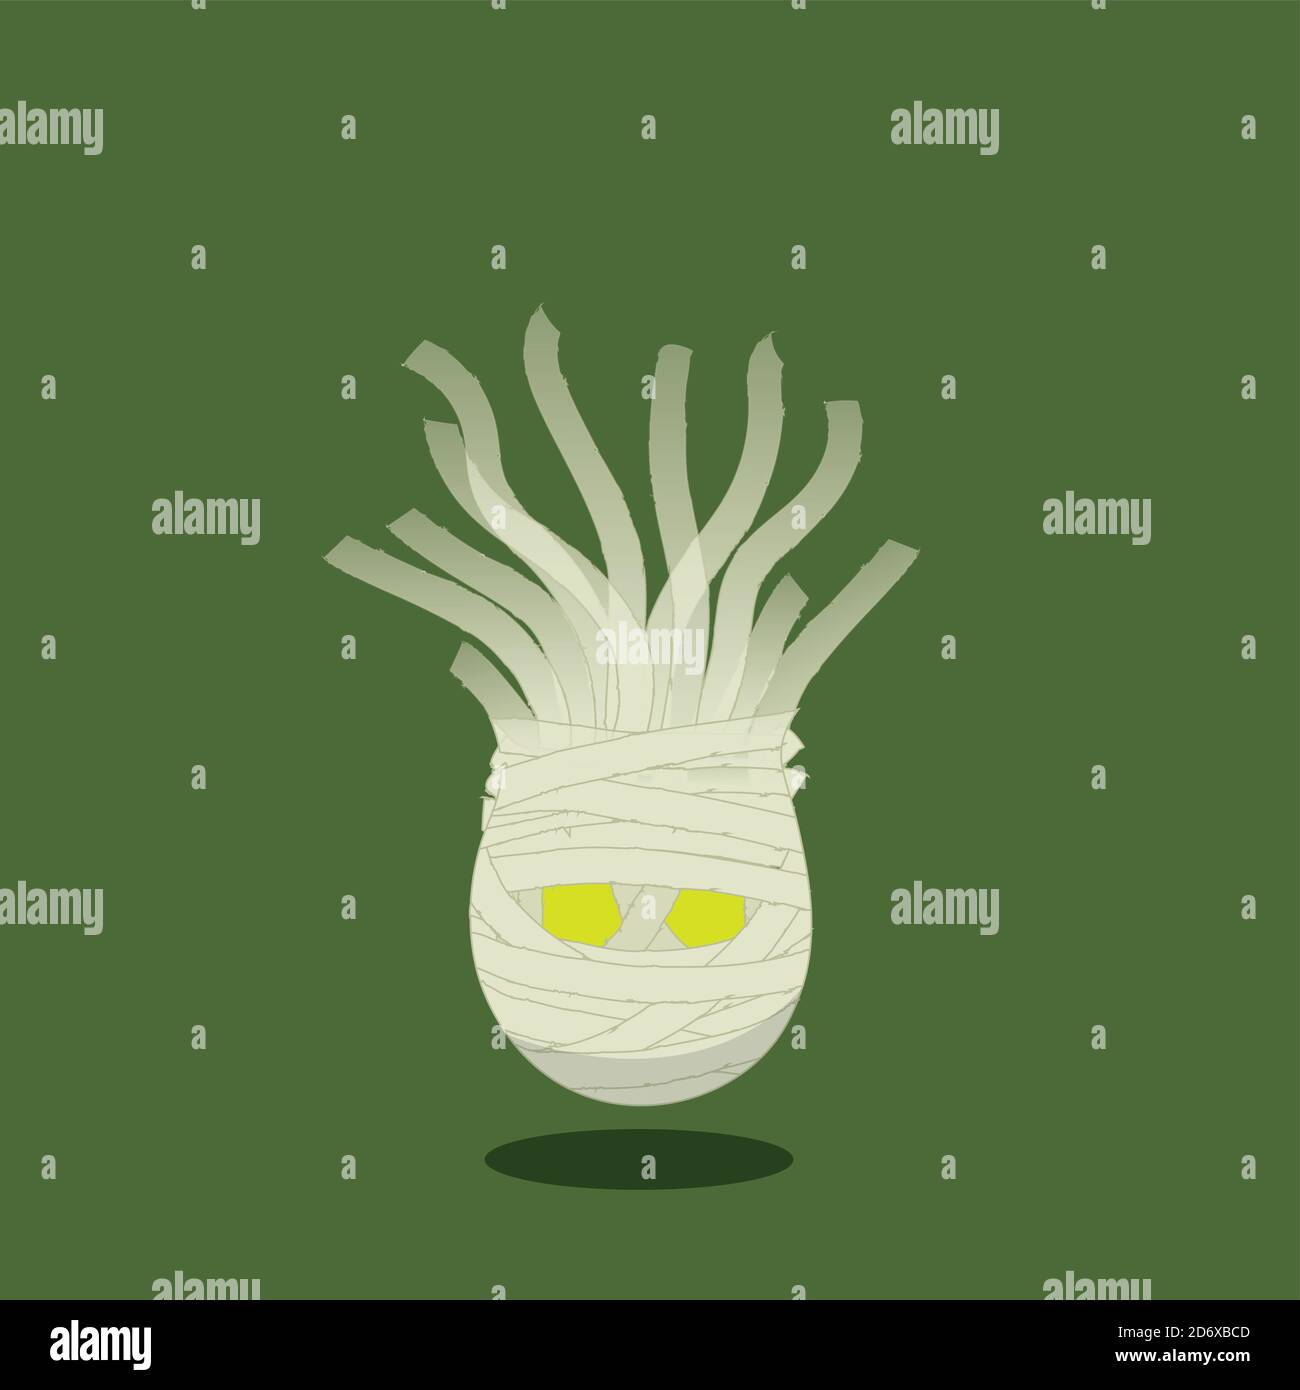 Halloween Wandering Mummy personnage isolé sur fond vert Illustration de Vecteur